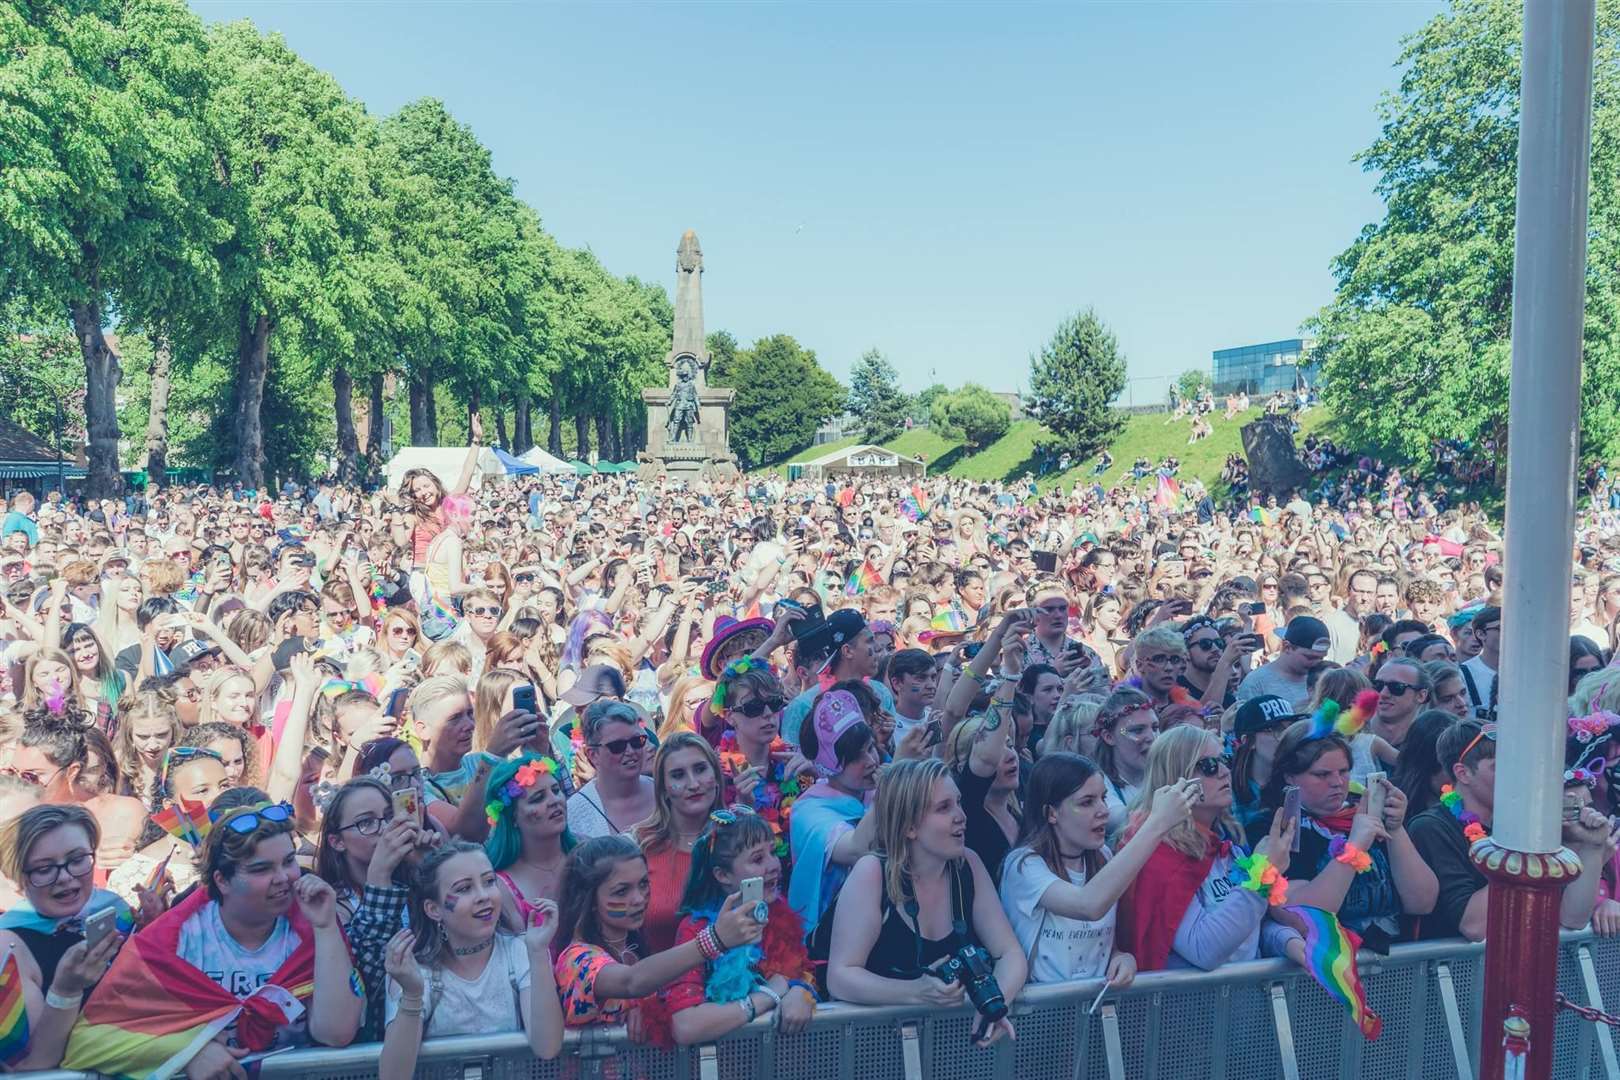 Canterbury Pride packed the Dane John Gardens in 2019